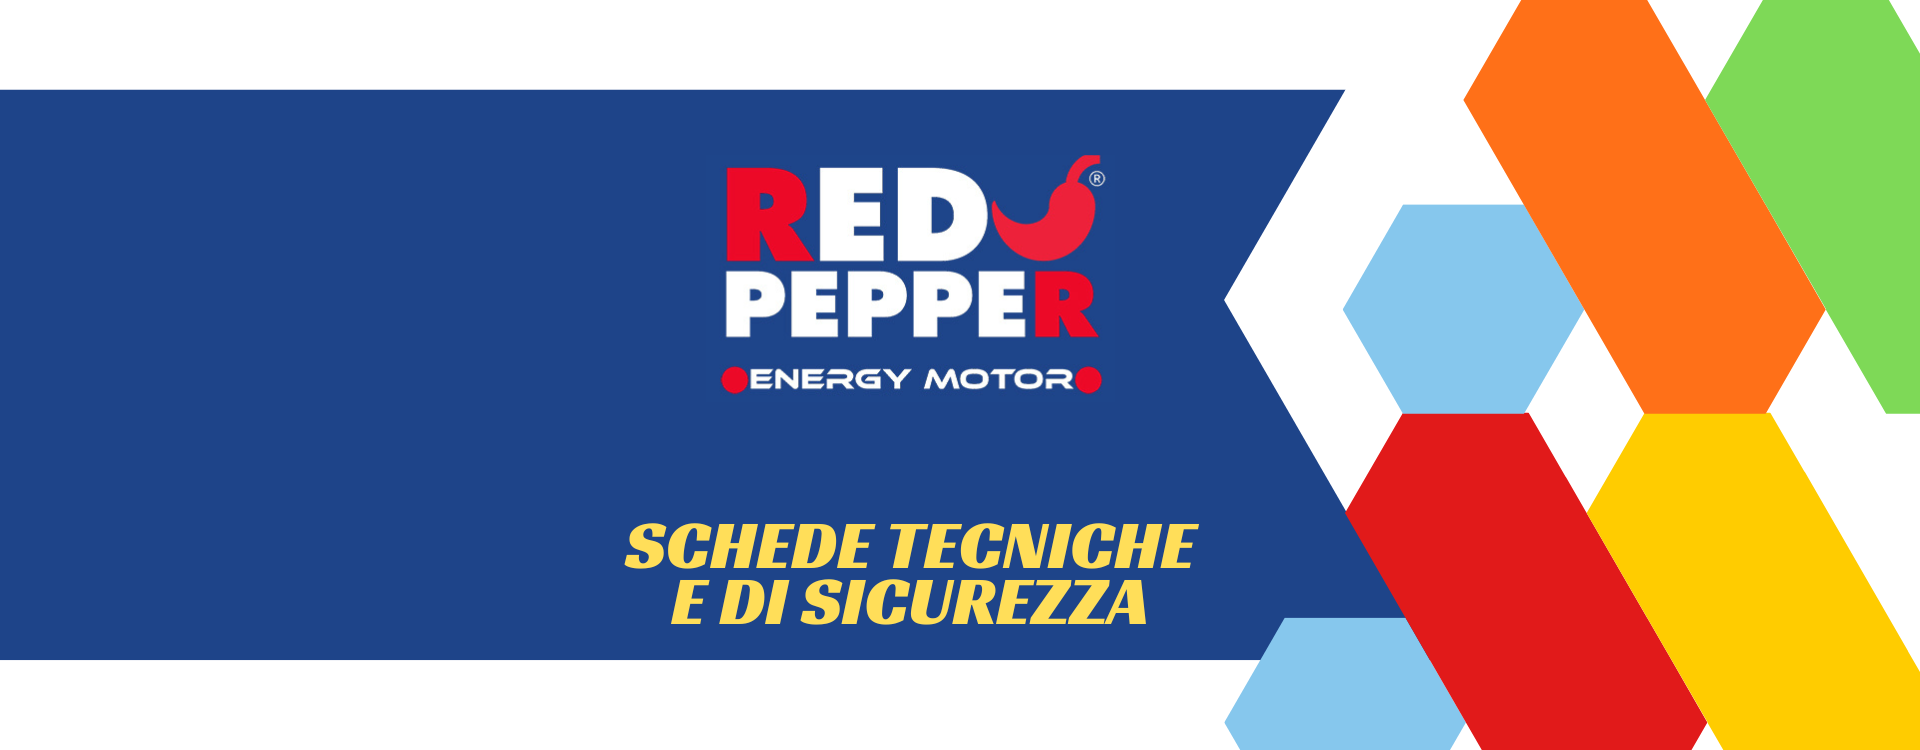 schede di sicurezza prodotti red pepper